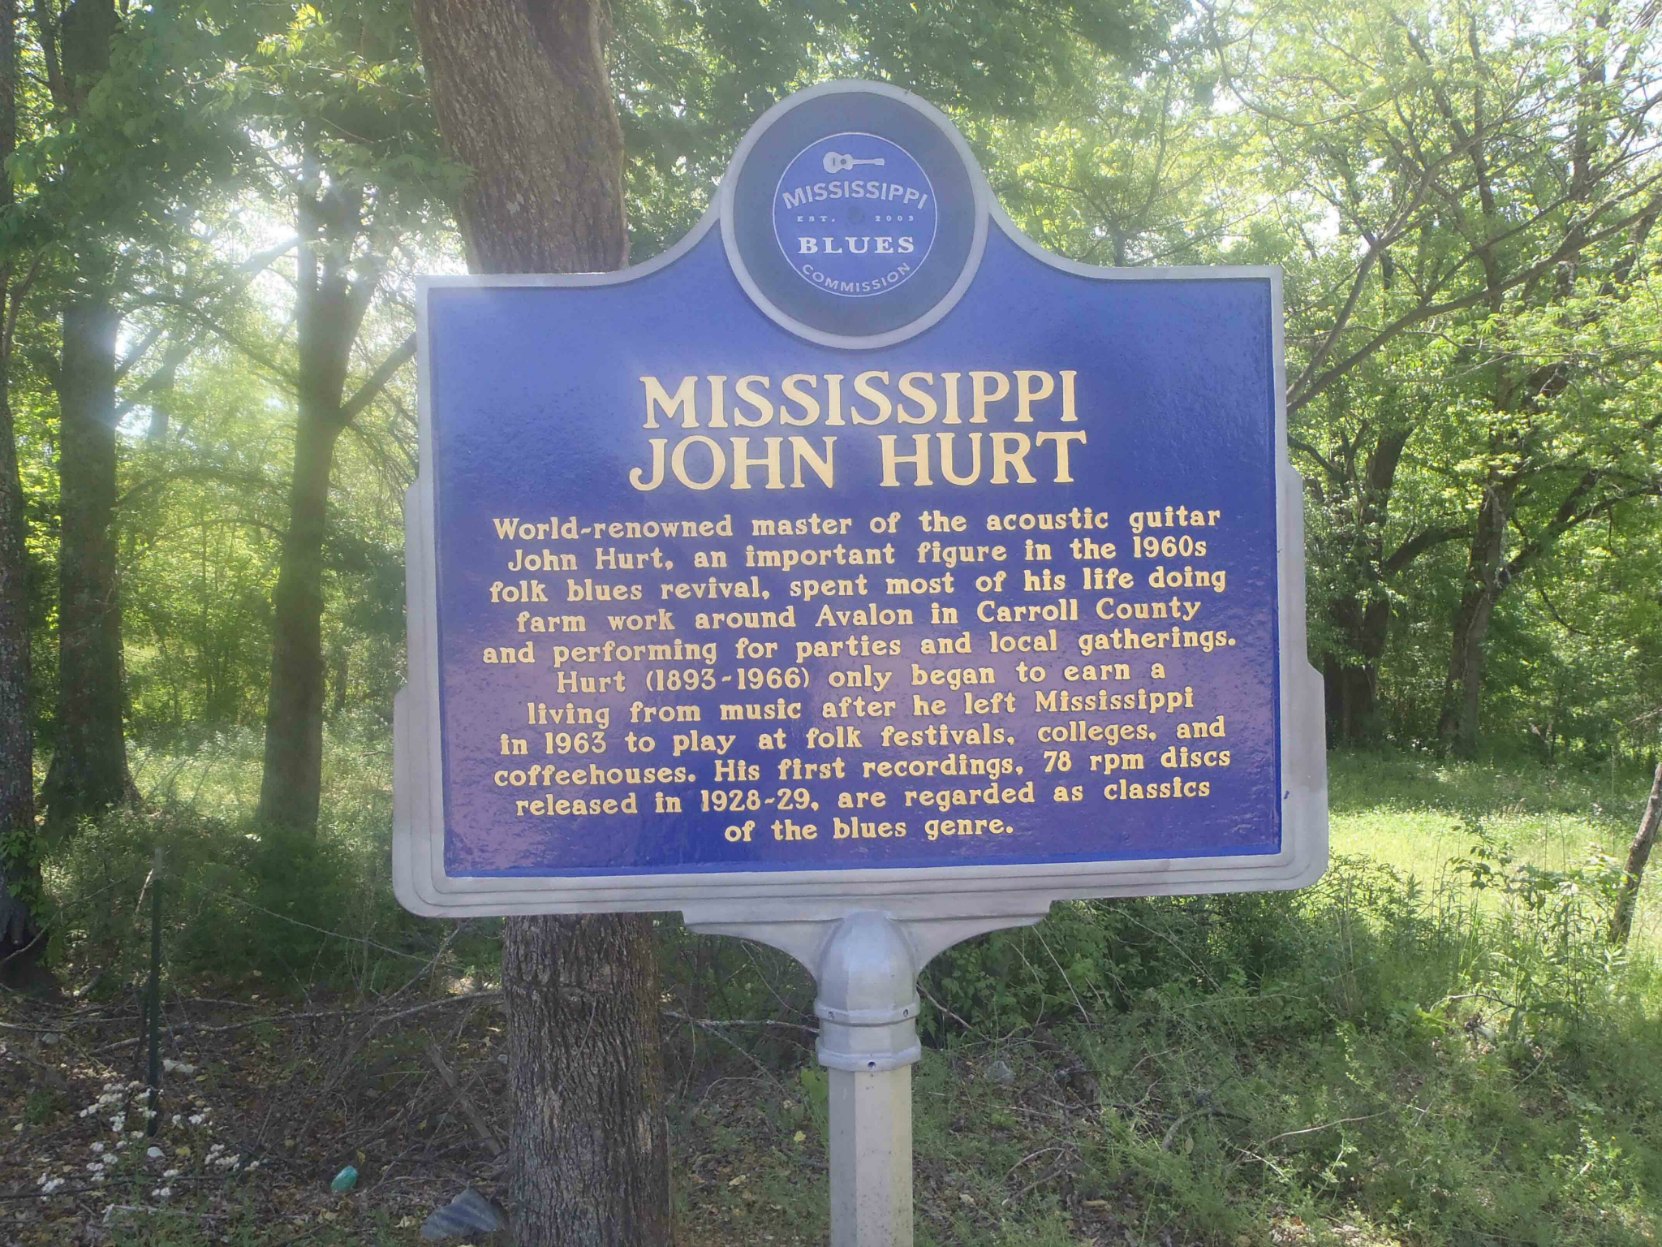 Mississippi Blues Trail marker commemorating Mississippi John Hurt, Avalon, Mississippi